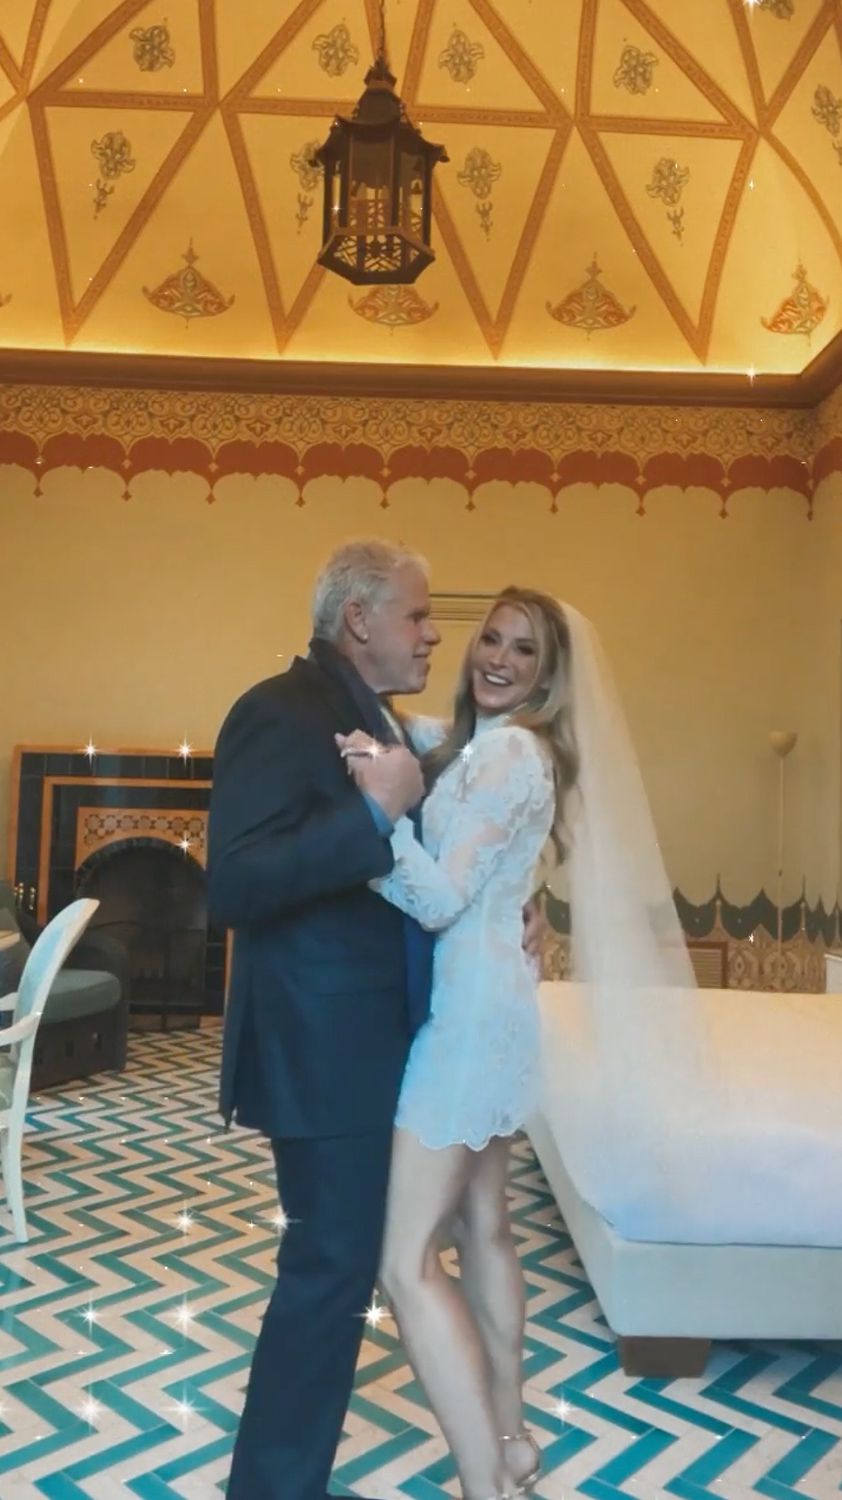 Ron Perlman Marries Fiancée Allison Dunbar in Italy